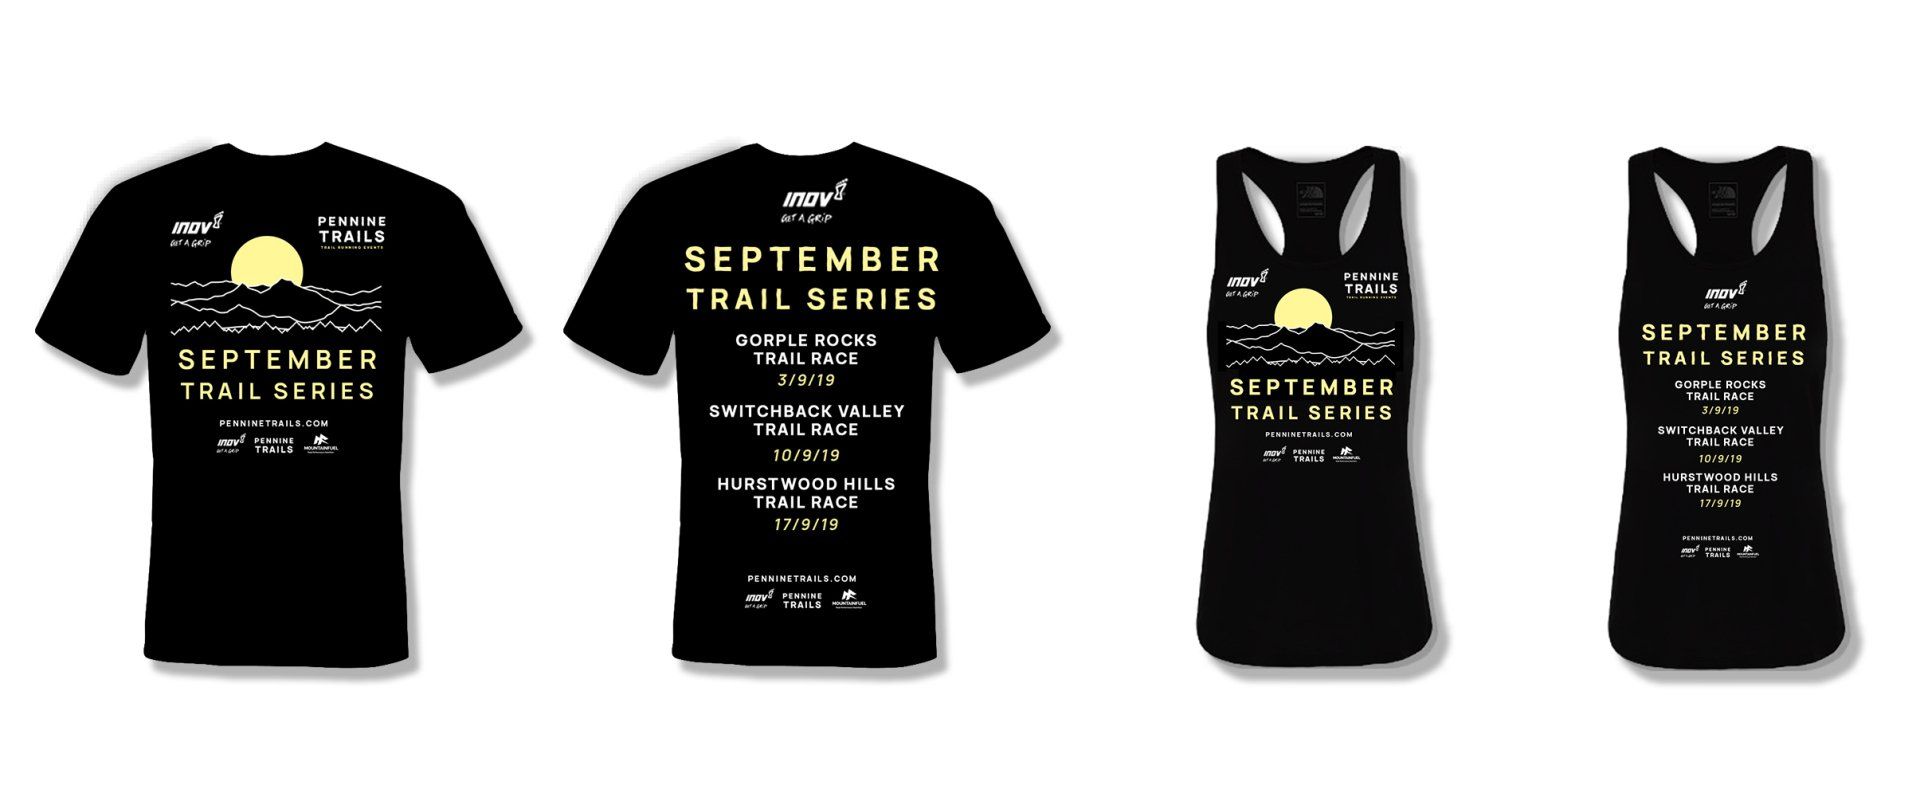 inov-8 Pennine Trail - September Midweek Trail Series Vests & T-Shirts